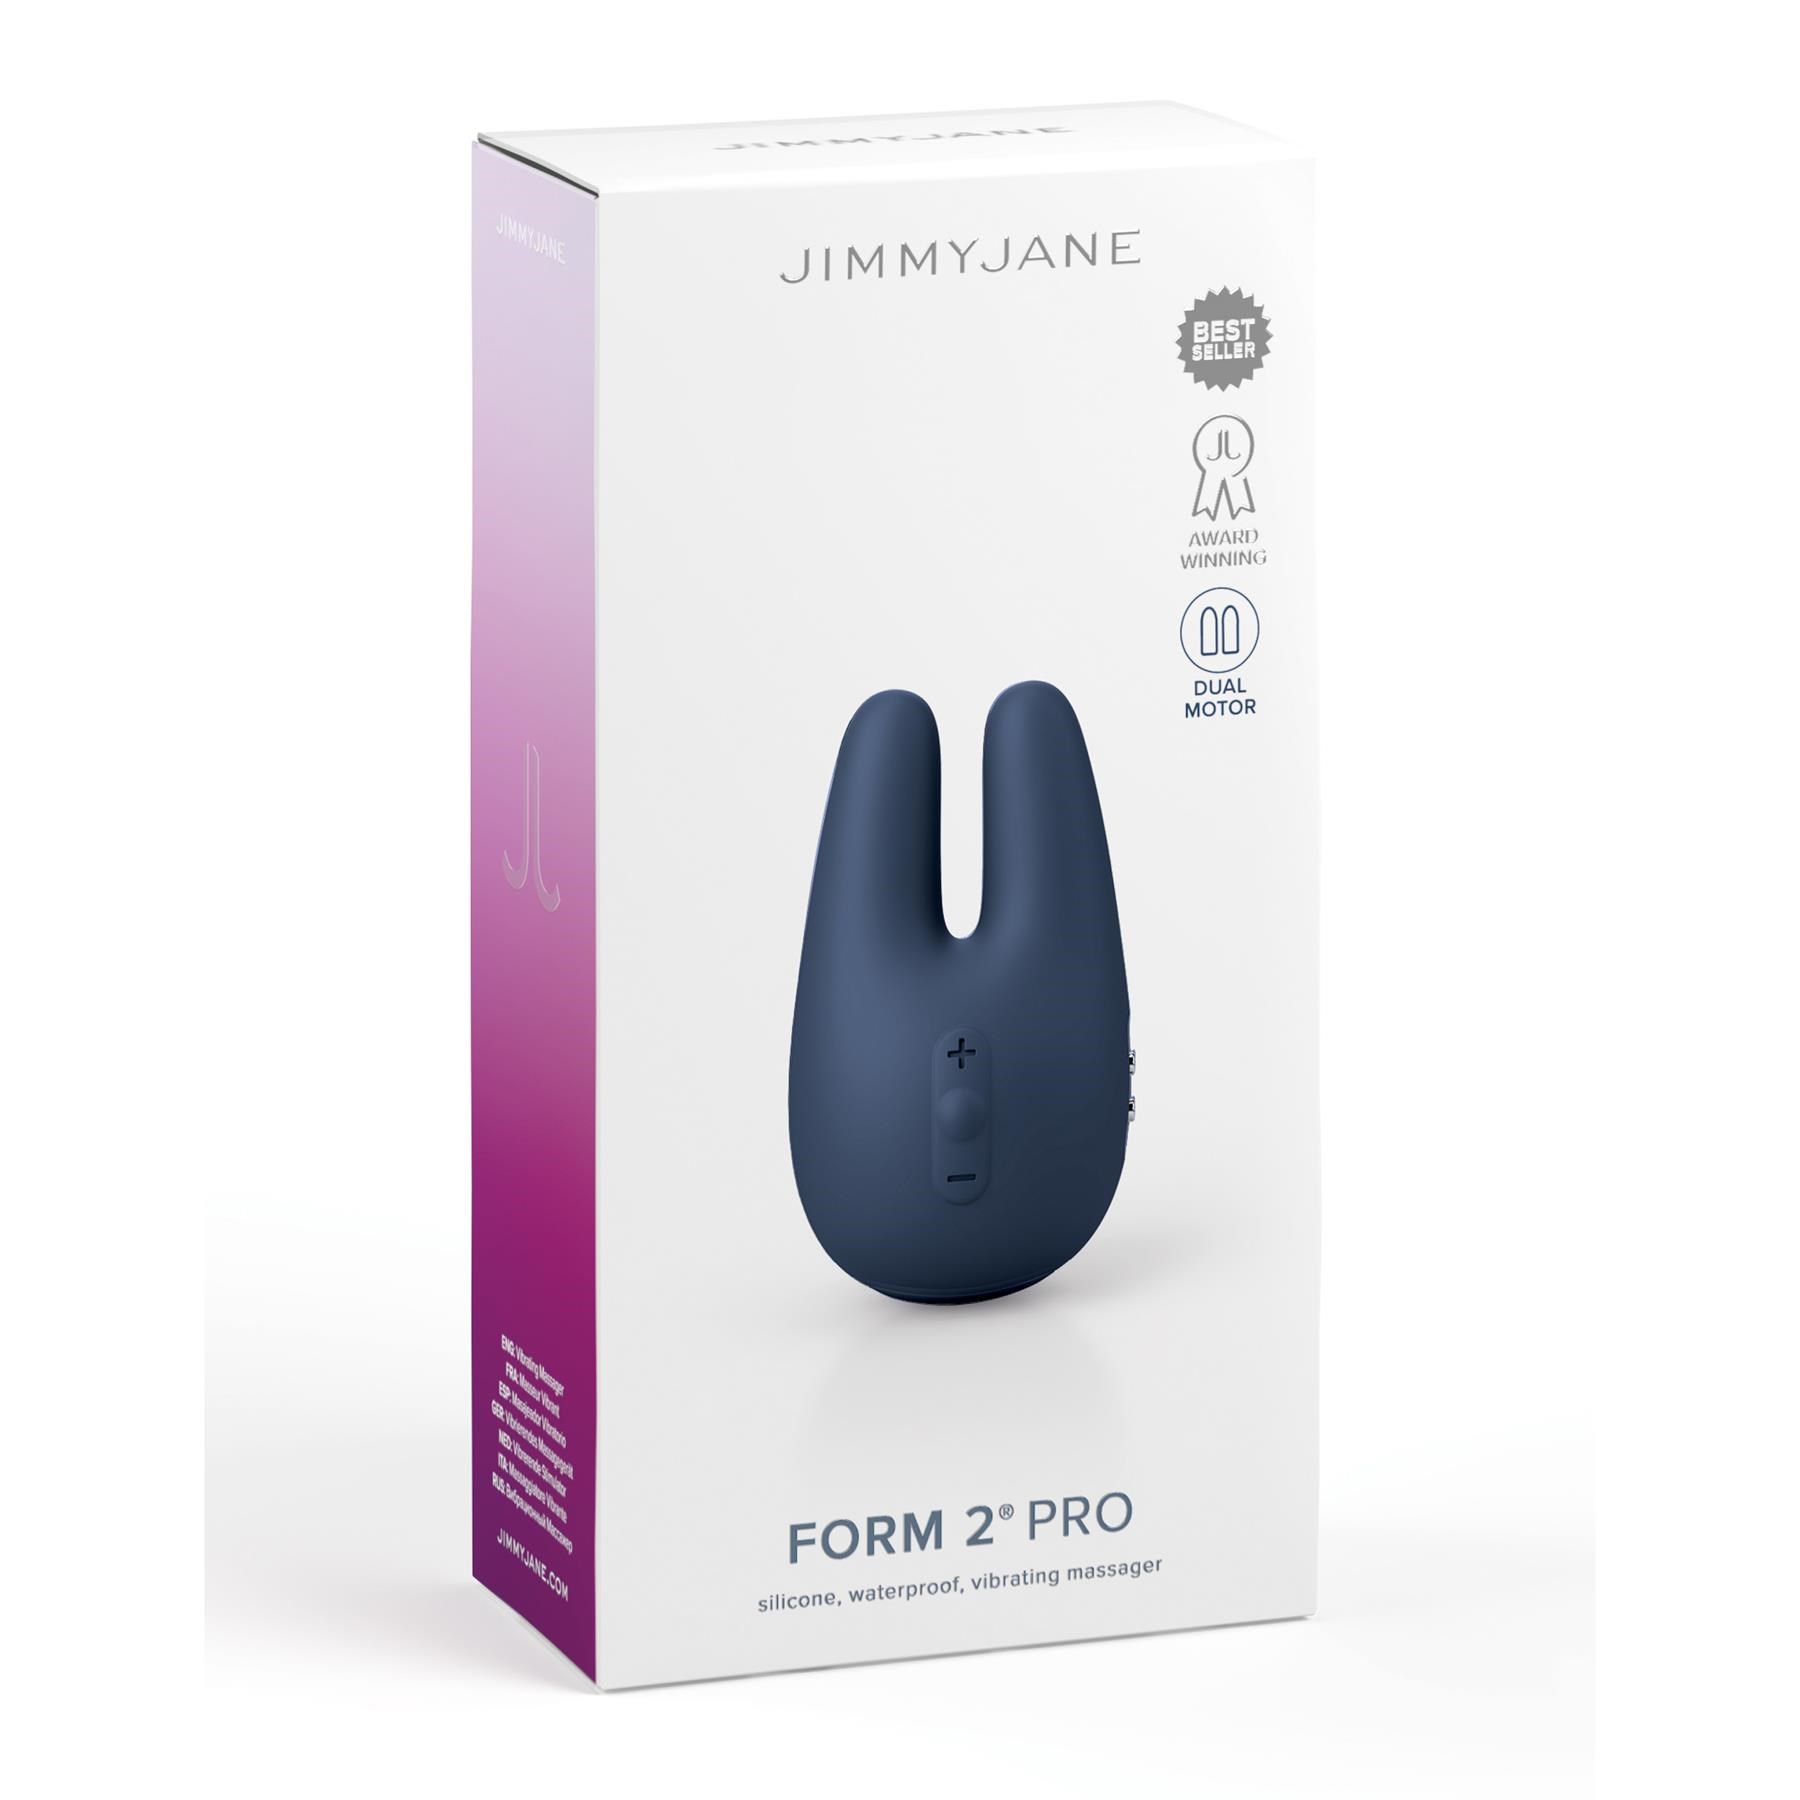 Jimmy Jane Form 2 Pro Vibrator - Packaging